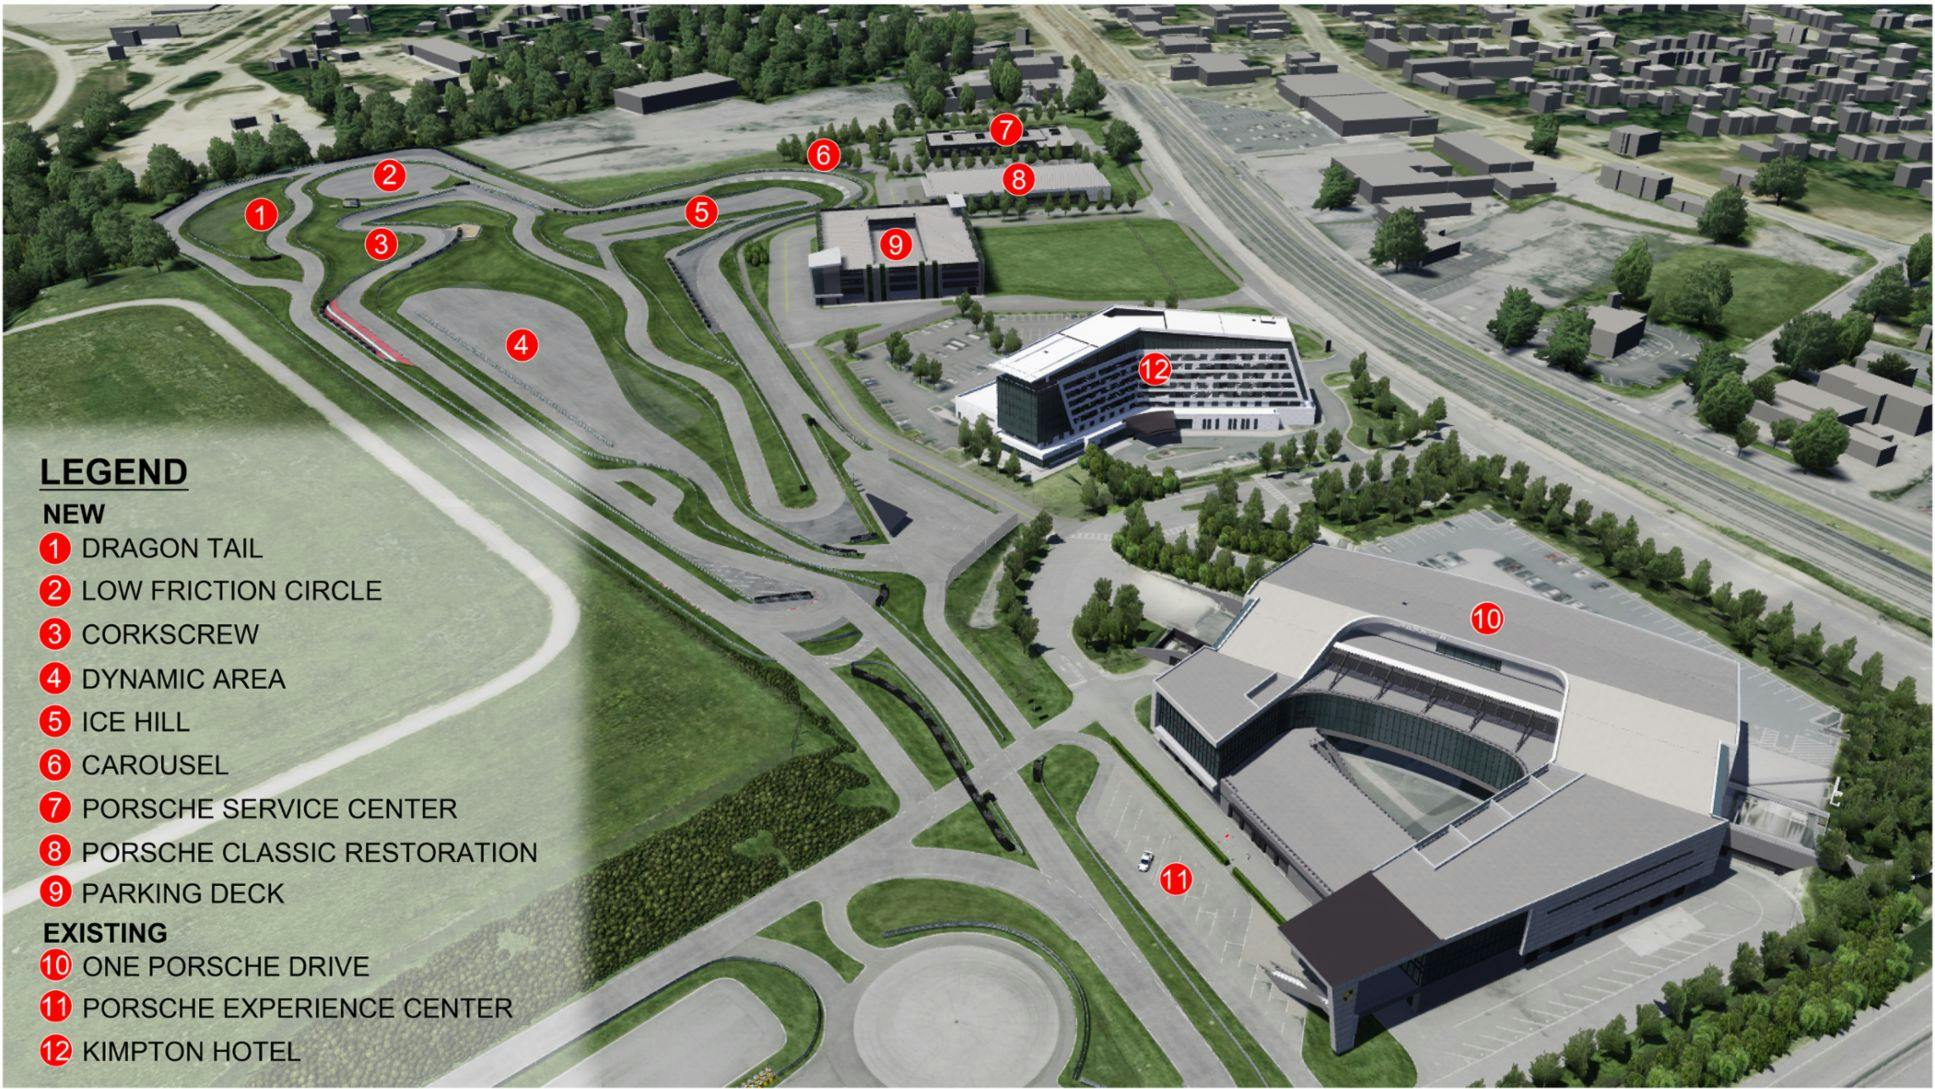 Porsche Atlanta new campus plans mockup render